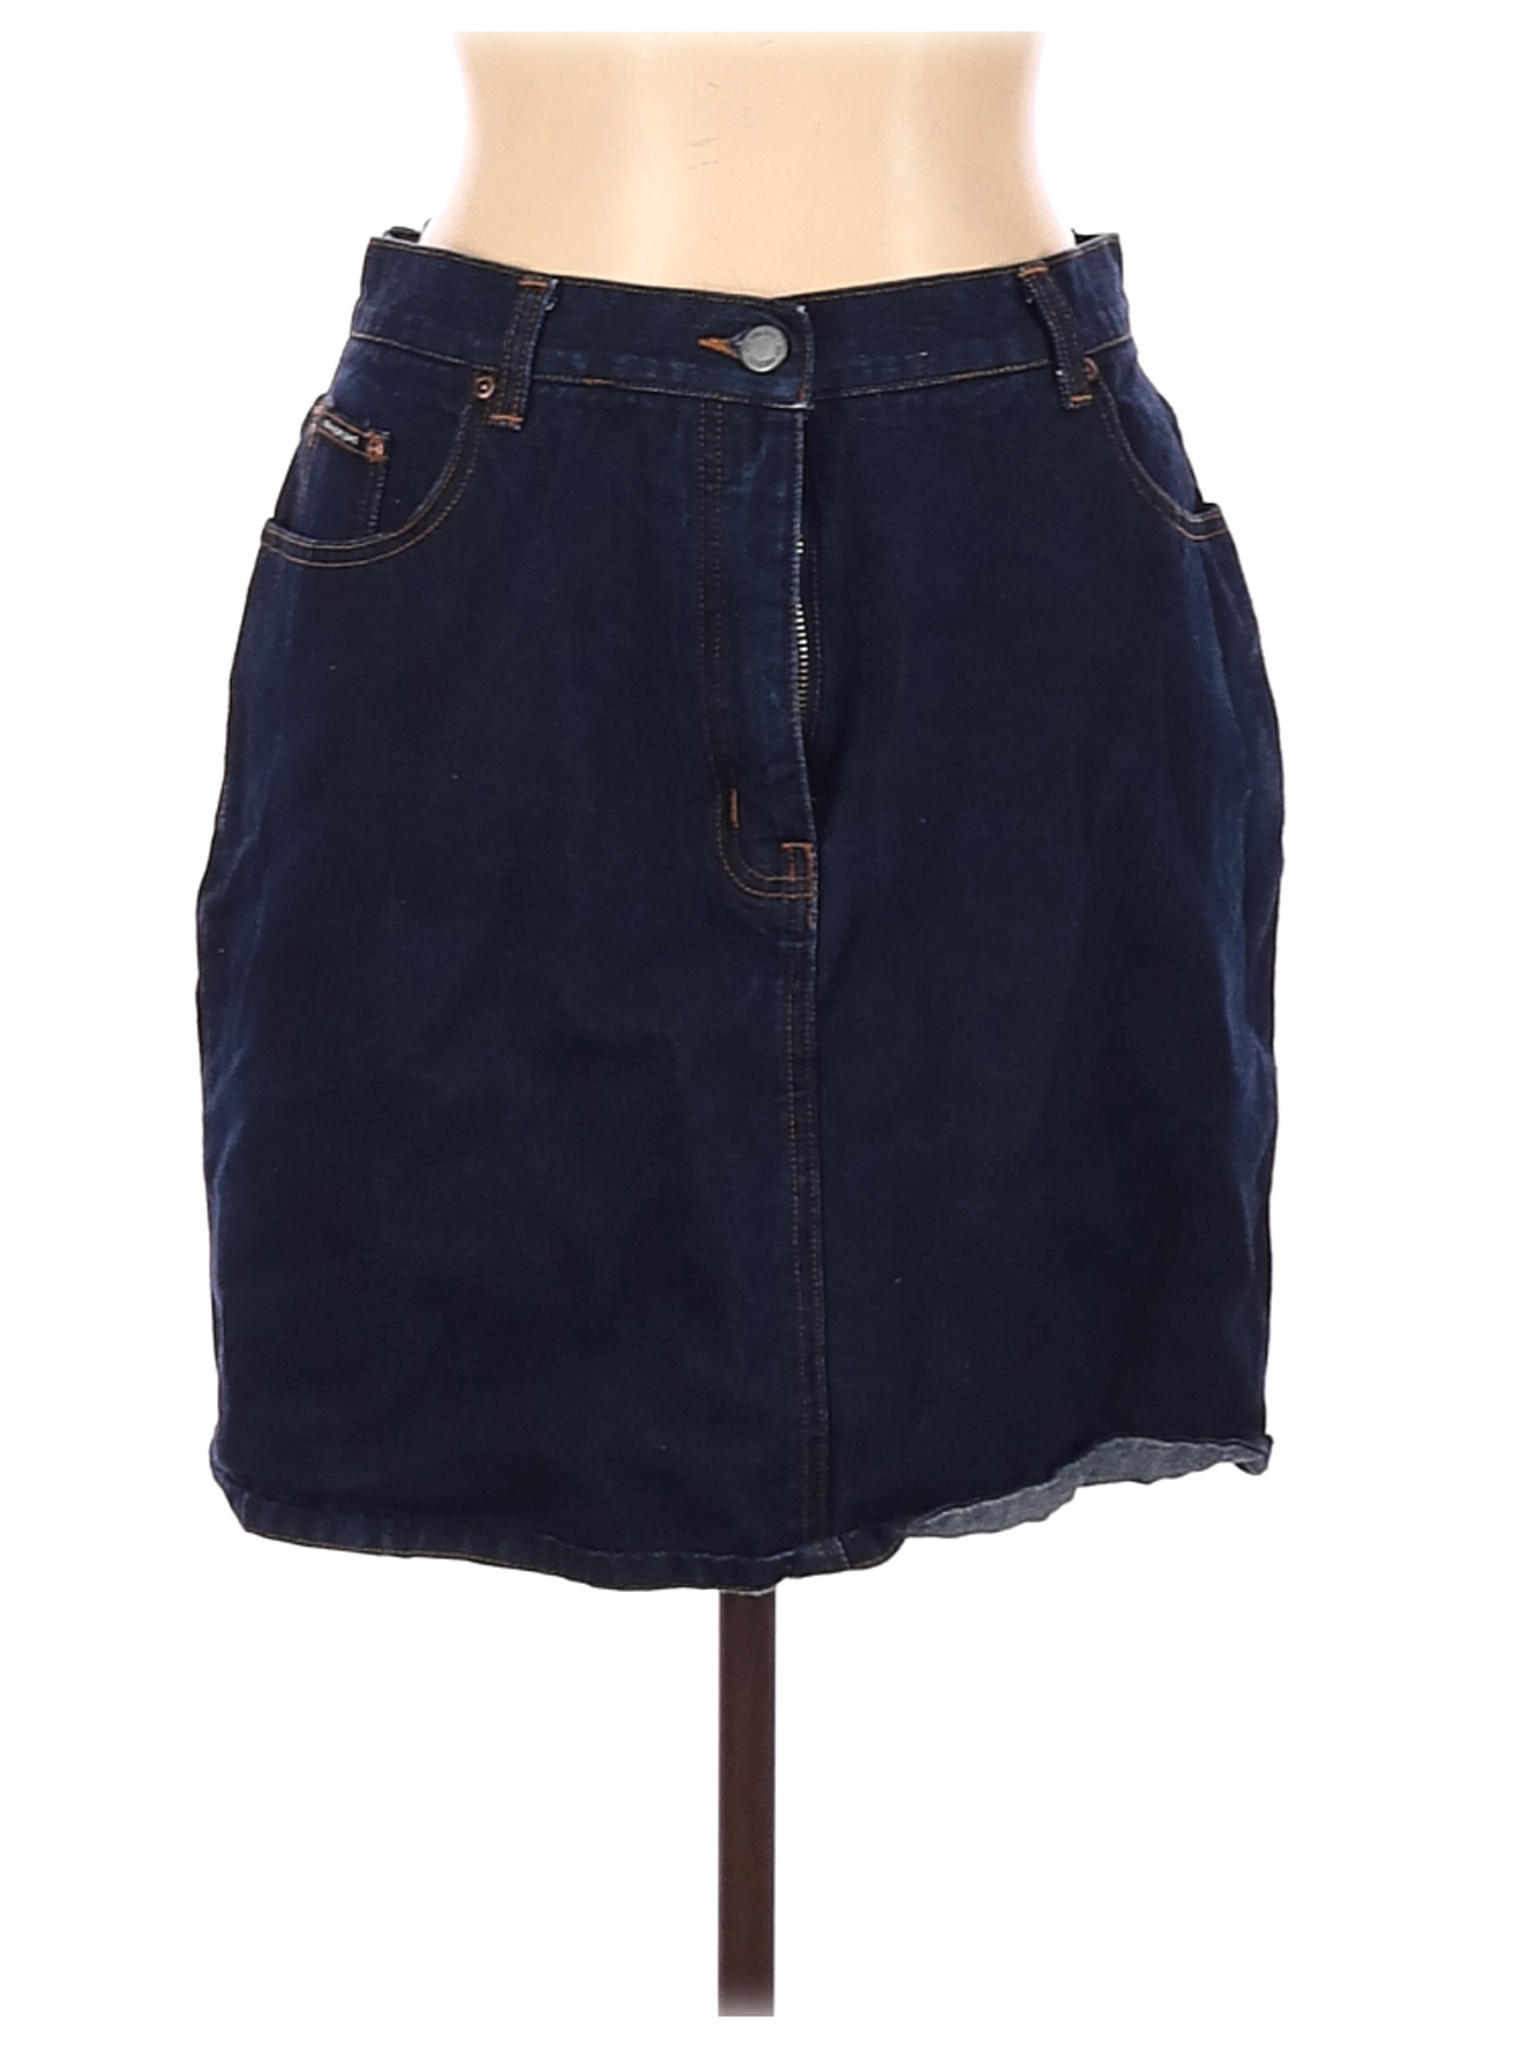 NYDJ Women Blue Denim Skirt 12 | eBay